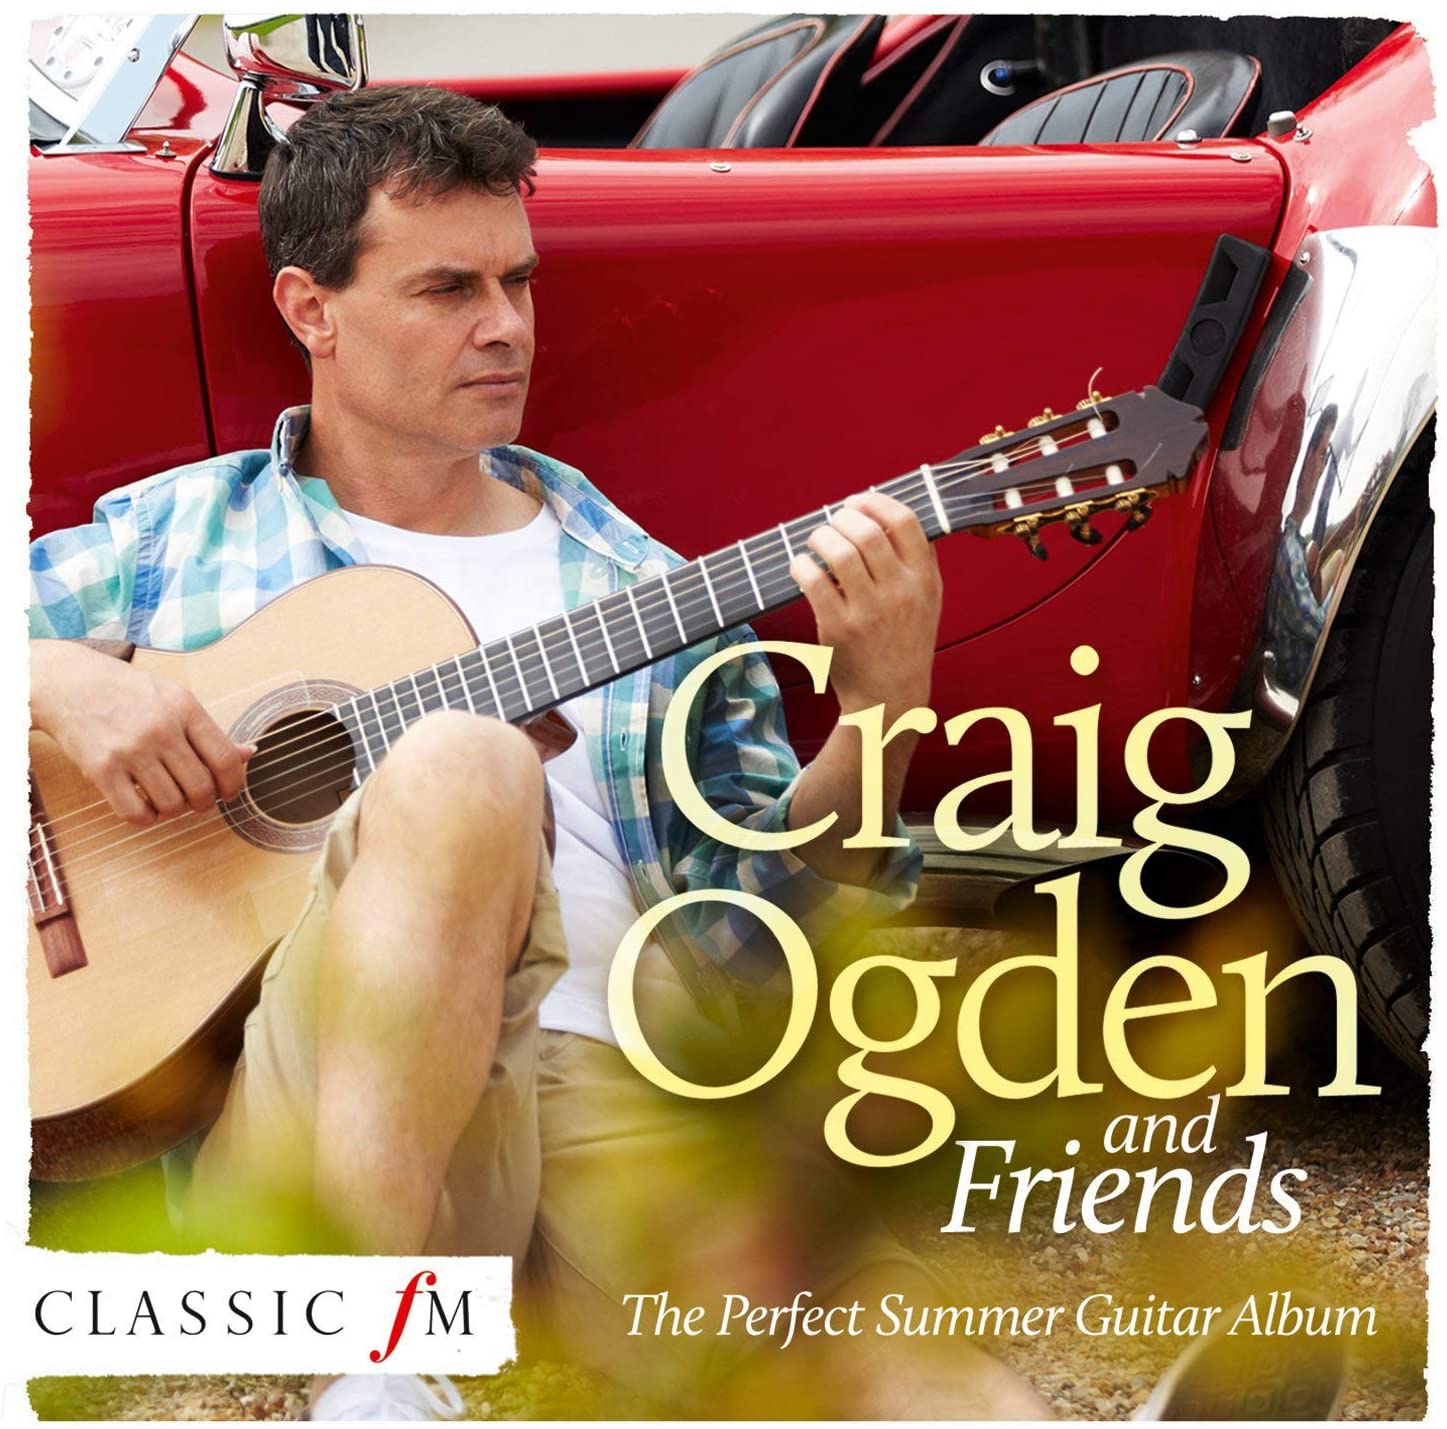 Craig Ogden and Friends